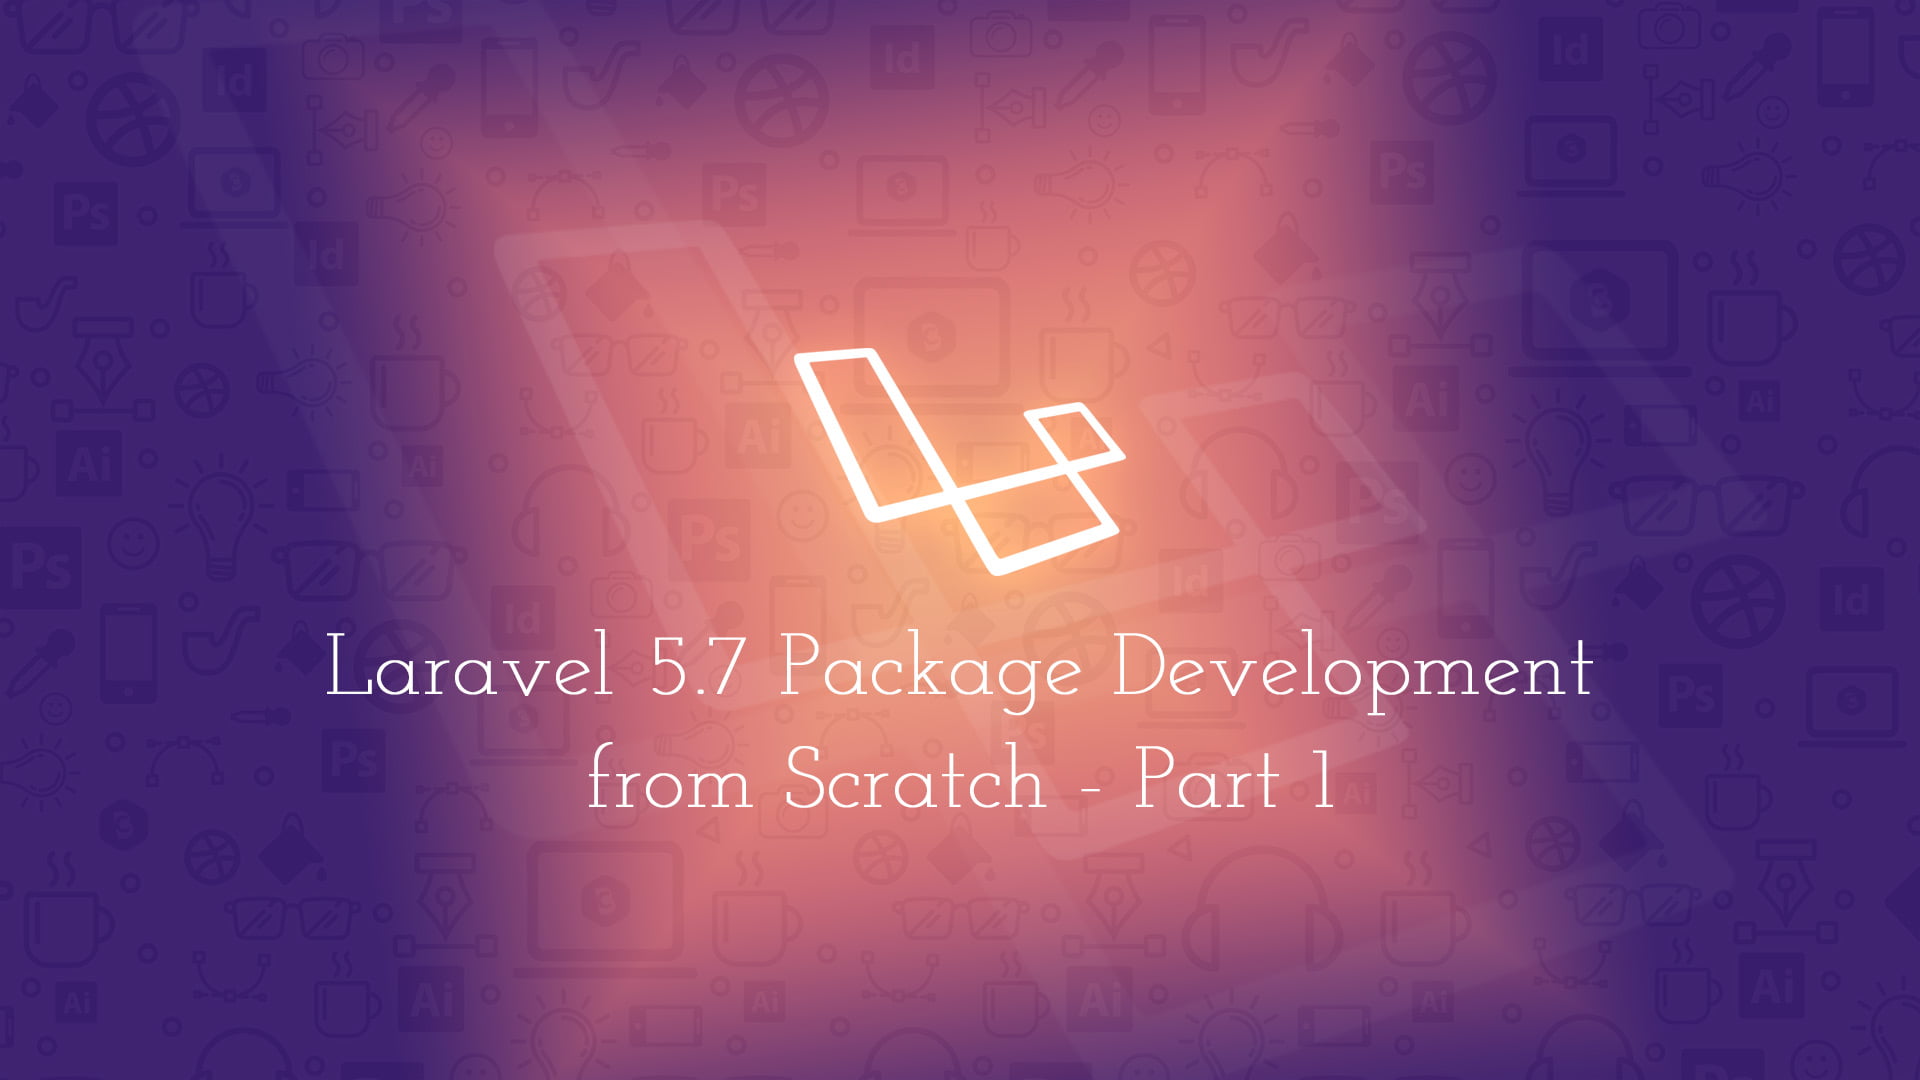 Laravel 5.7 Package Development from Scratch - Part 1